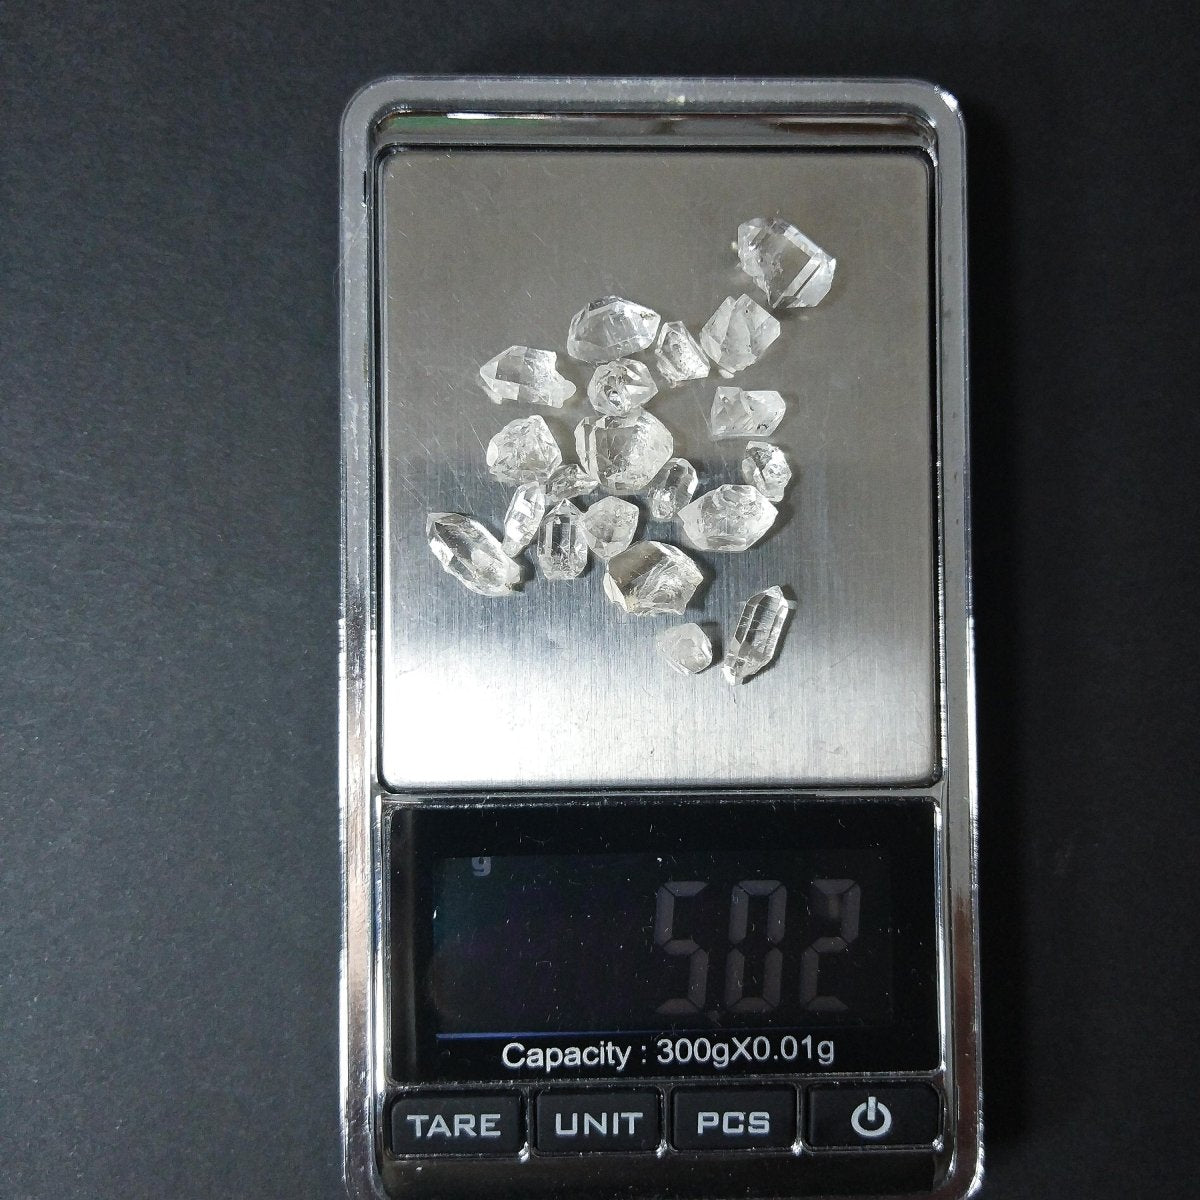 Diamond Quartz lot 3-10mm 5gr Lots - Anima Mundi Crystals